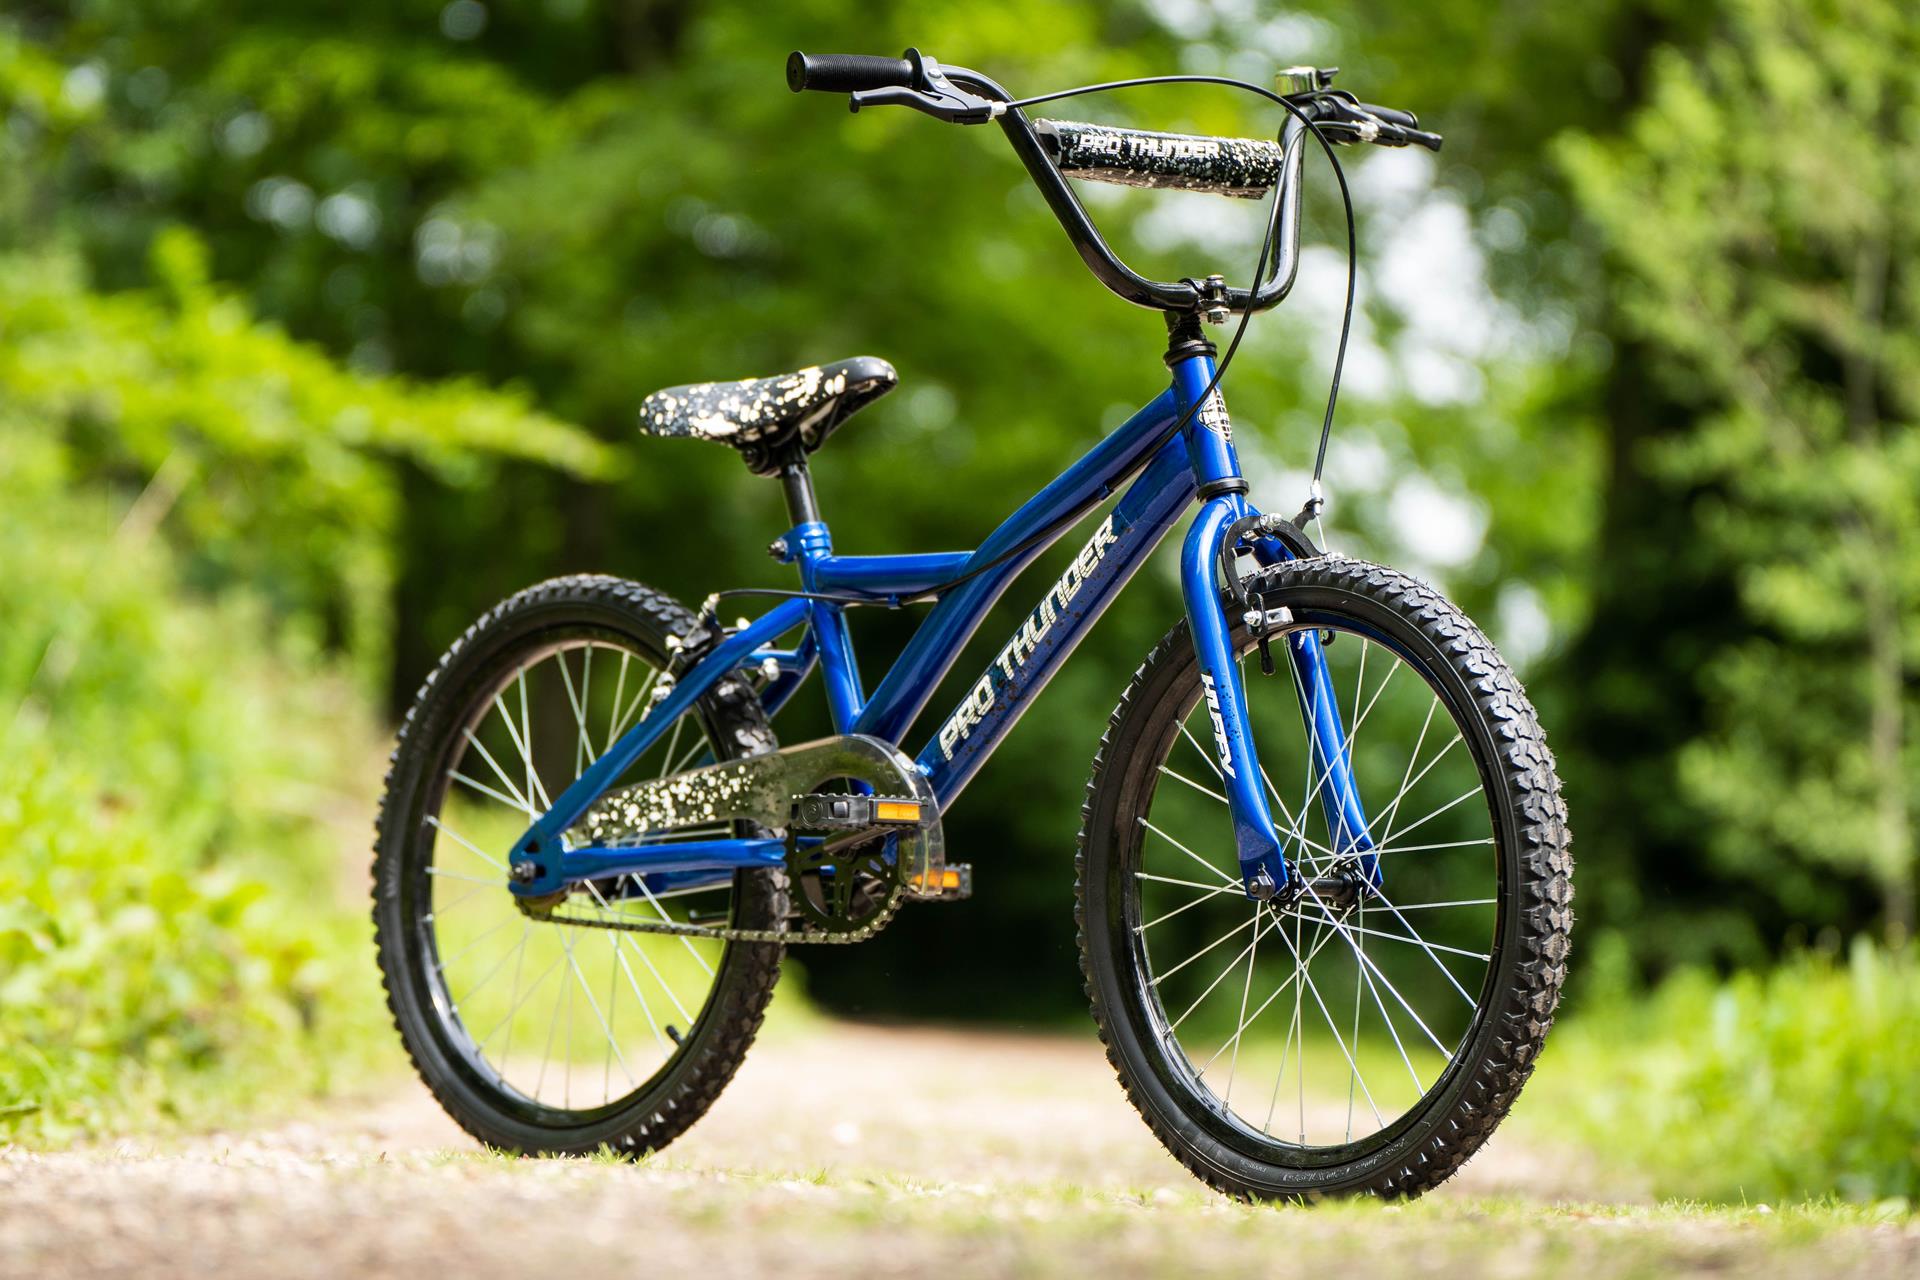 Huffy Pro Thunder 20" Детский велосипед, Королевский синий